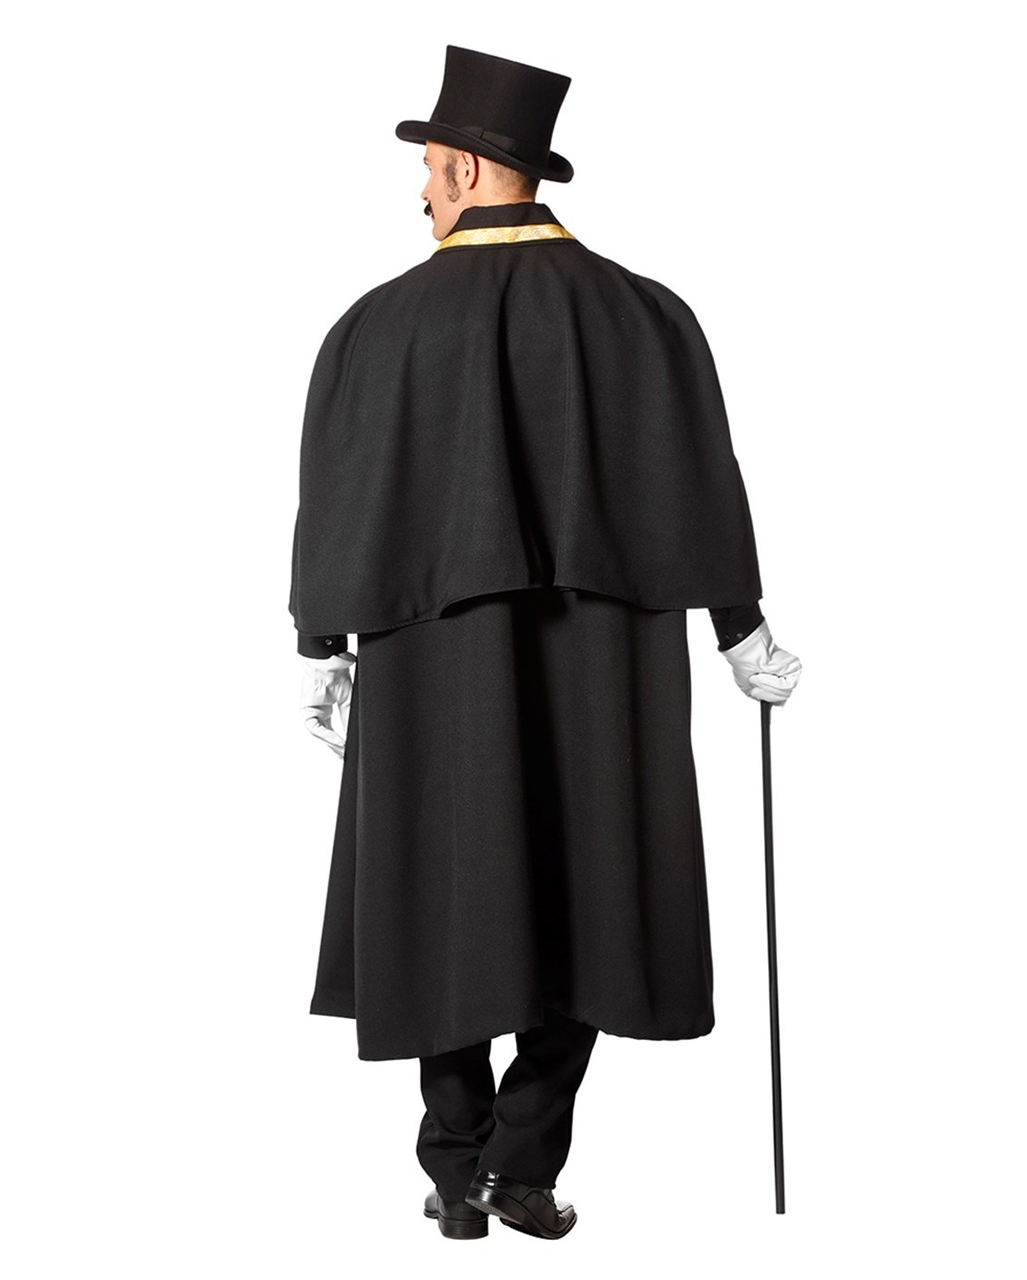 Costume Coachman Coat Black Order NOW | Horror-Shop.com